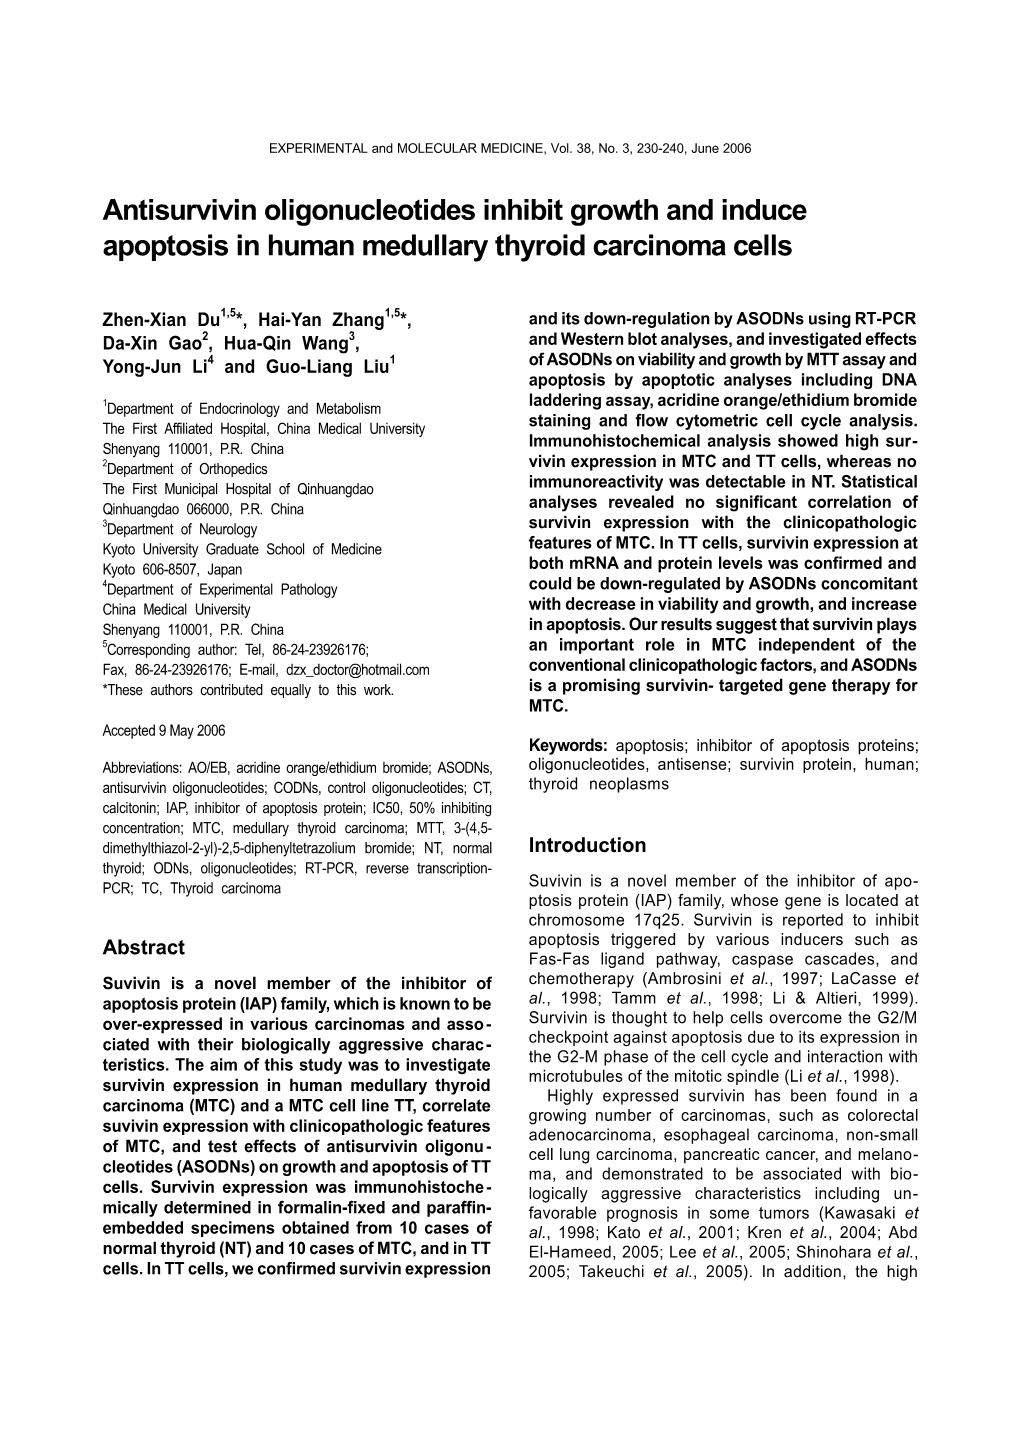 Antisurvivin Oligonucleotides Inhibit Growth and Induce Apoptosis in Human Medullary Thyroid Carcinoma Cells